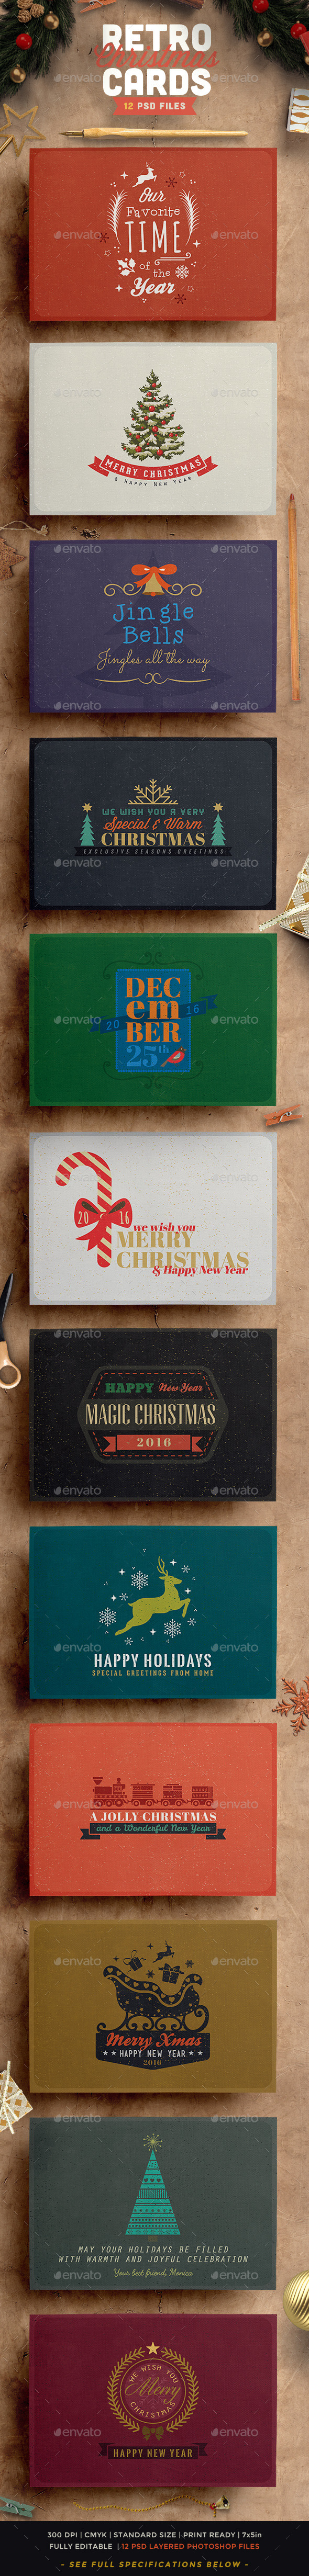 Retro Vintage Christmas Card Pack